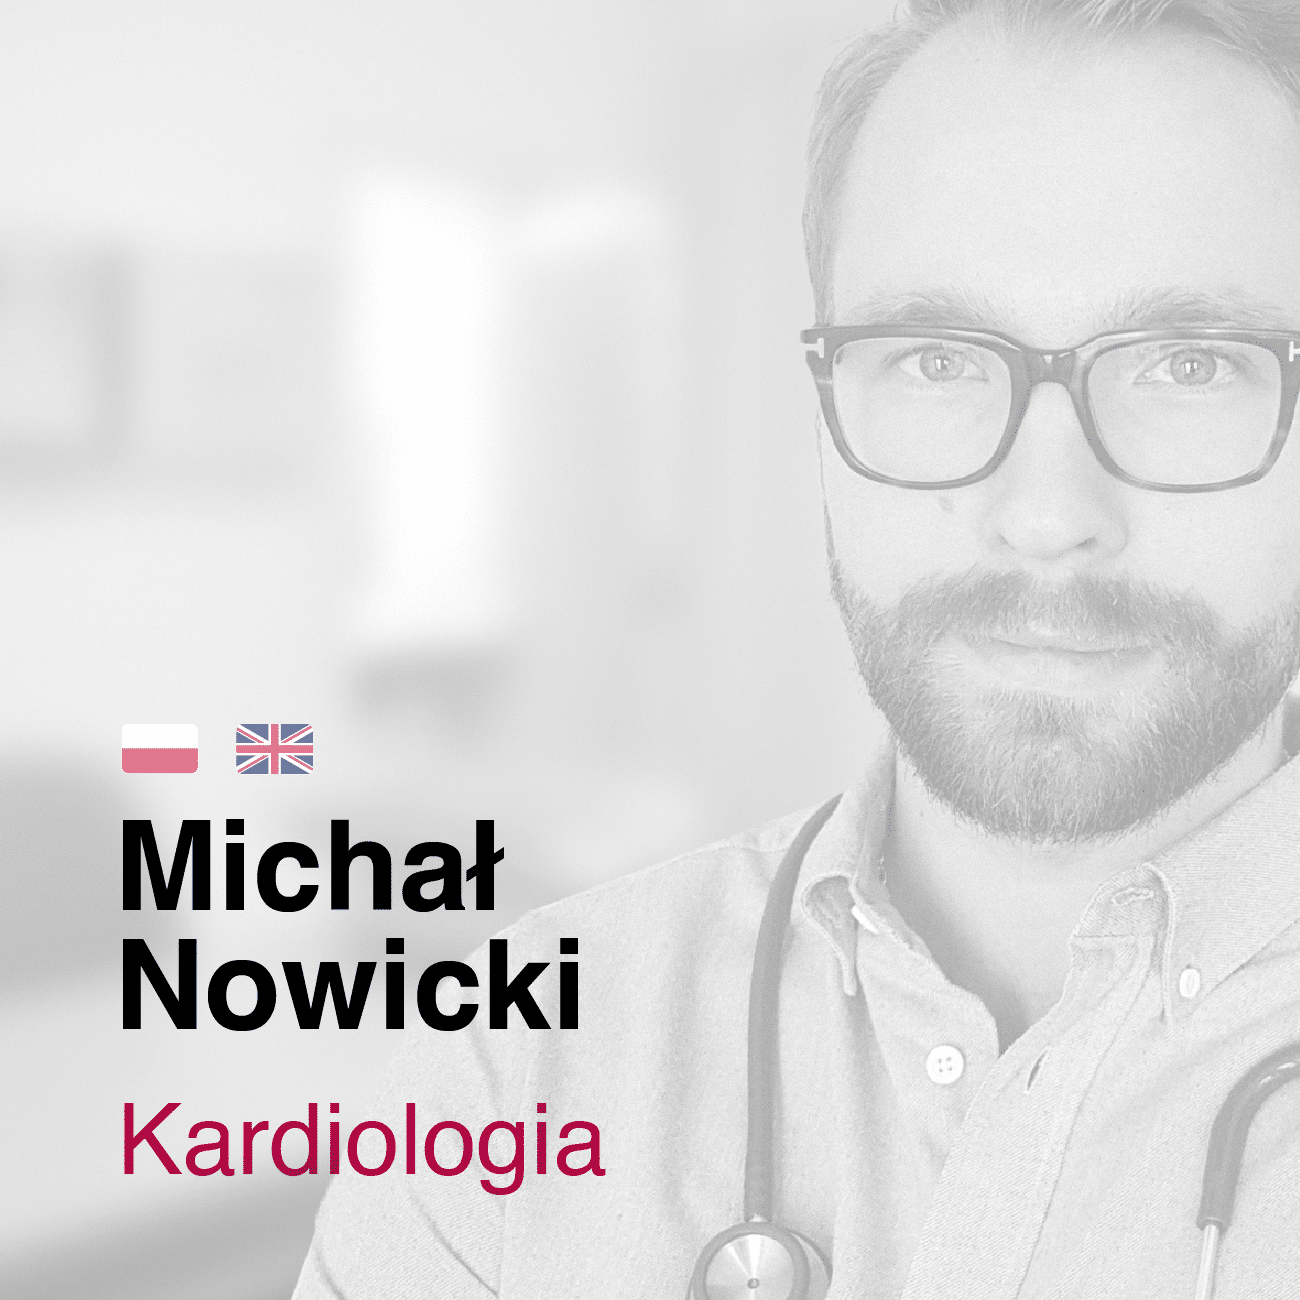 Michał Nowicki, Kardiolog medicana.pl Centrum Medycyny Konopne